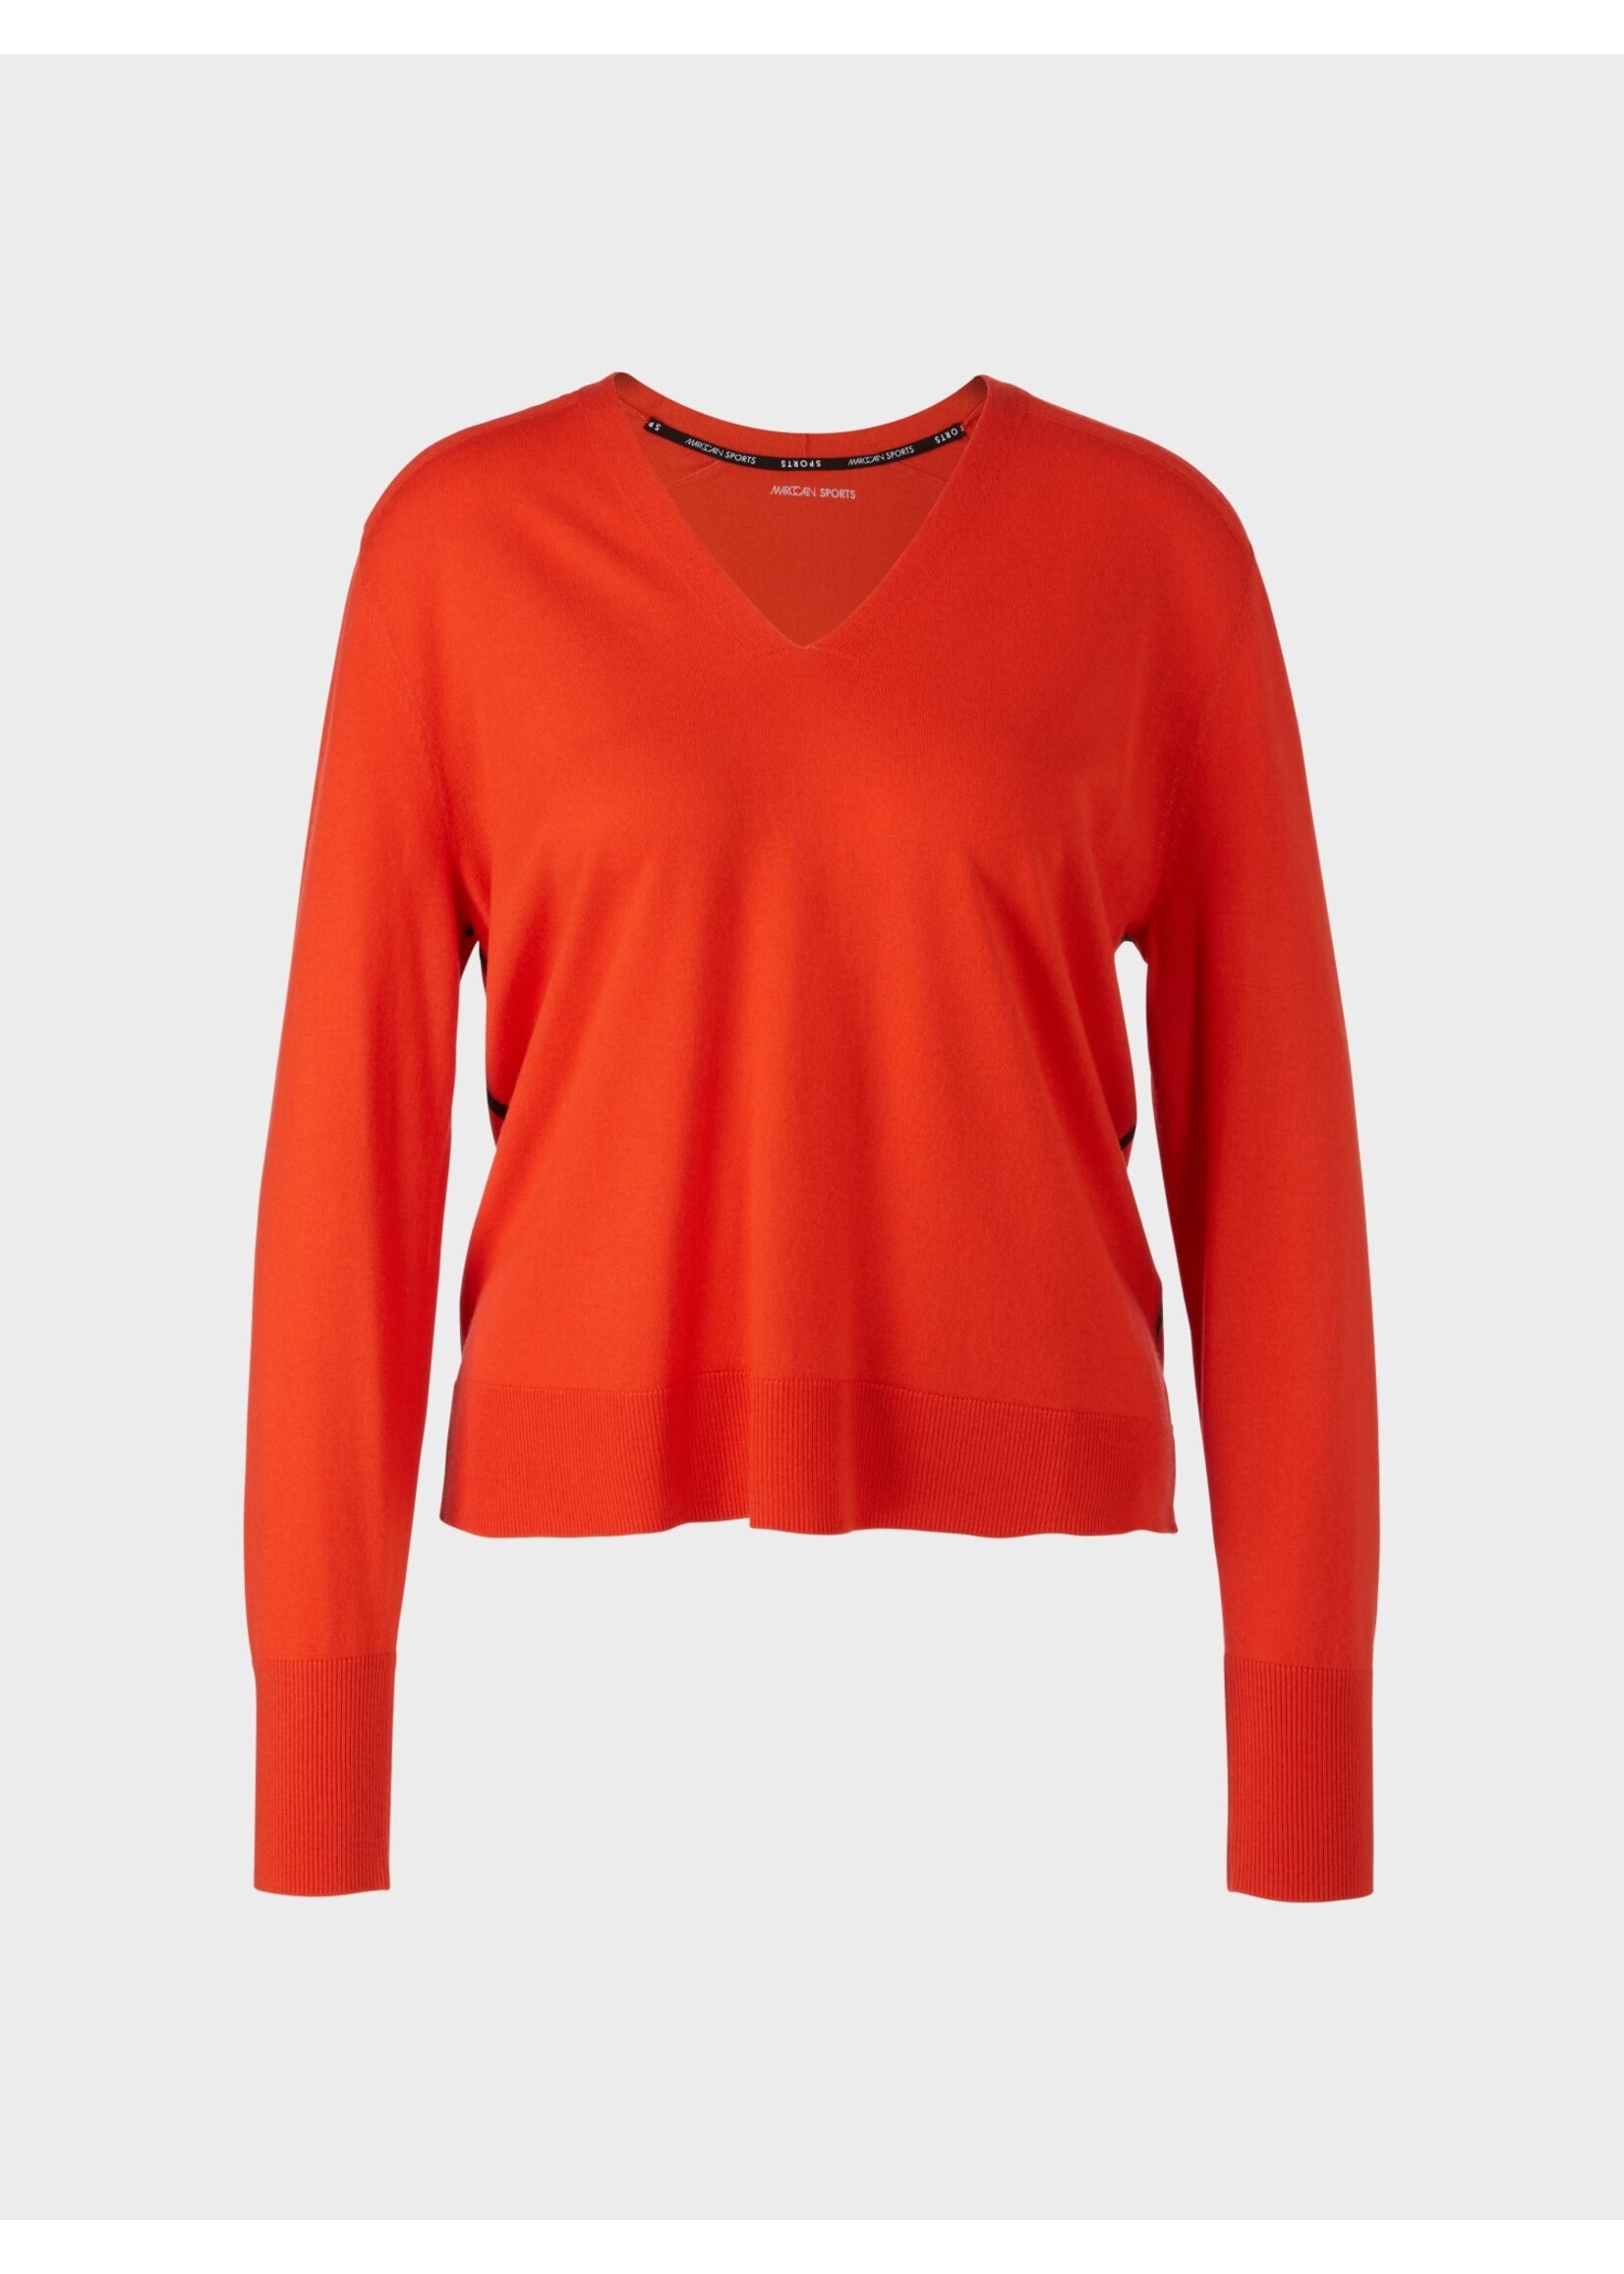 Marccain Sports Sweater VS 41.02 M80 278